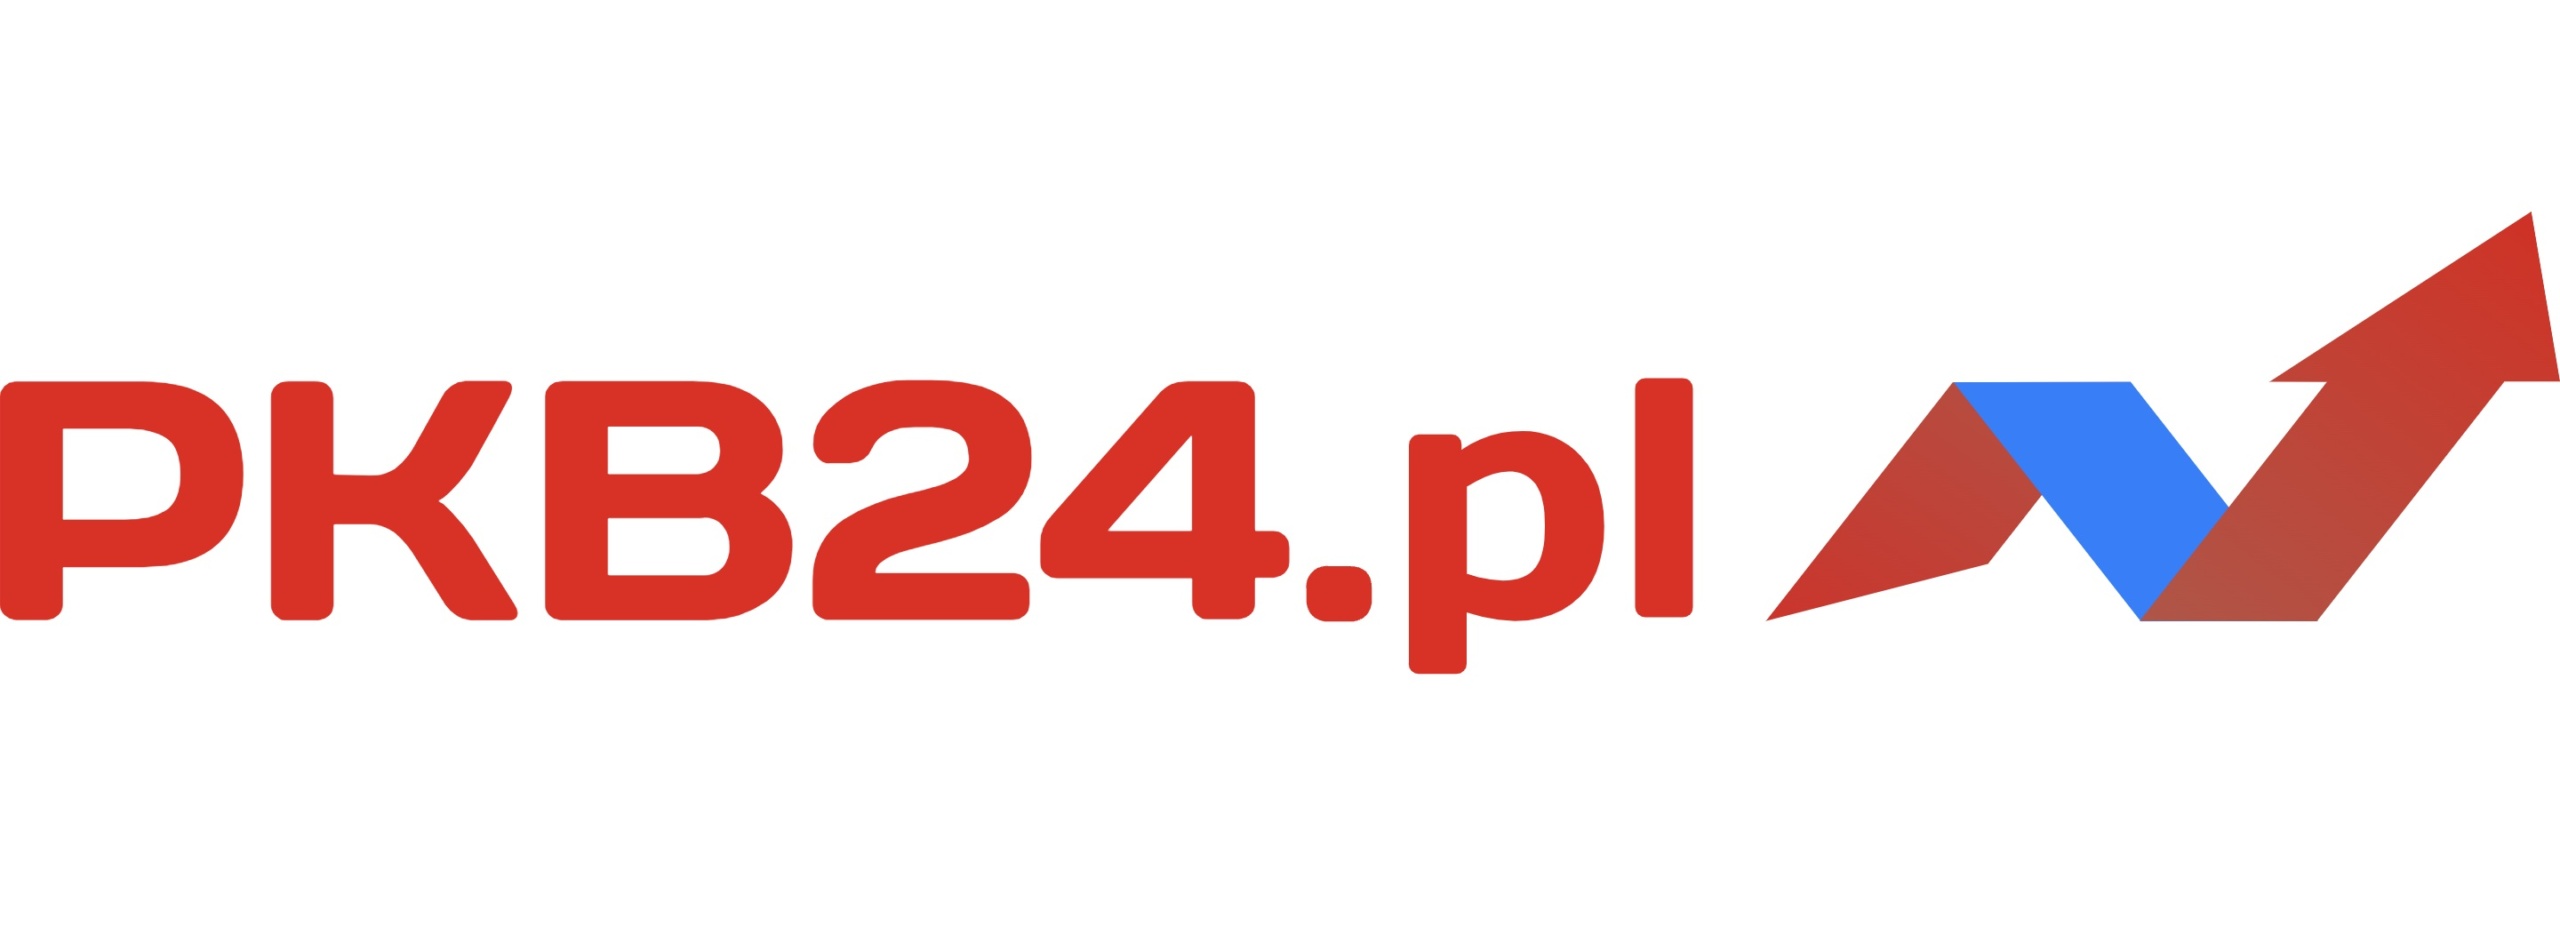 PKB24.pl 